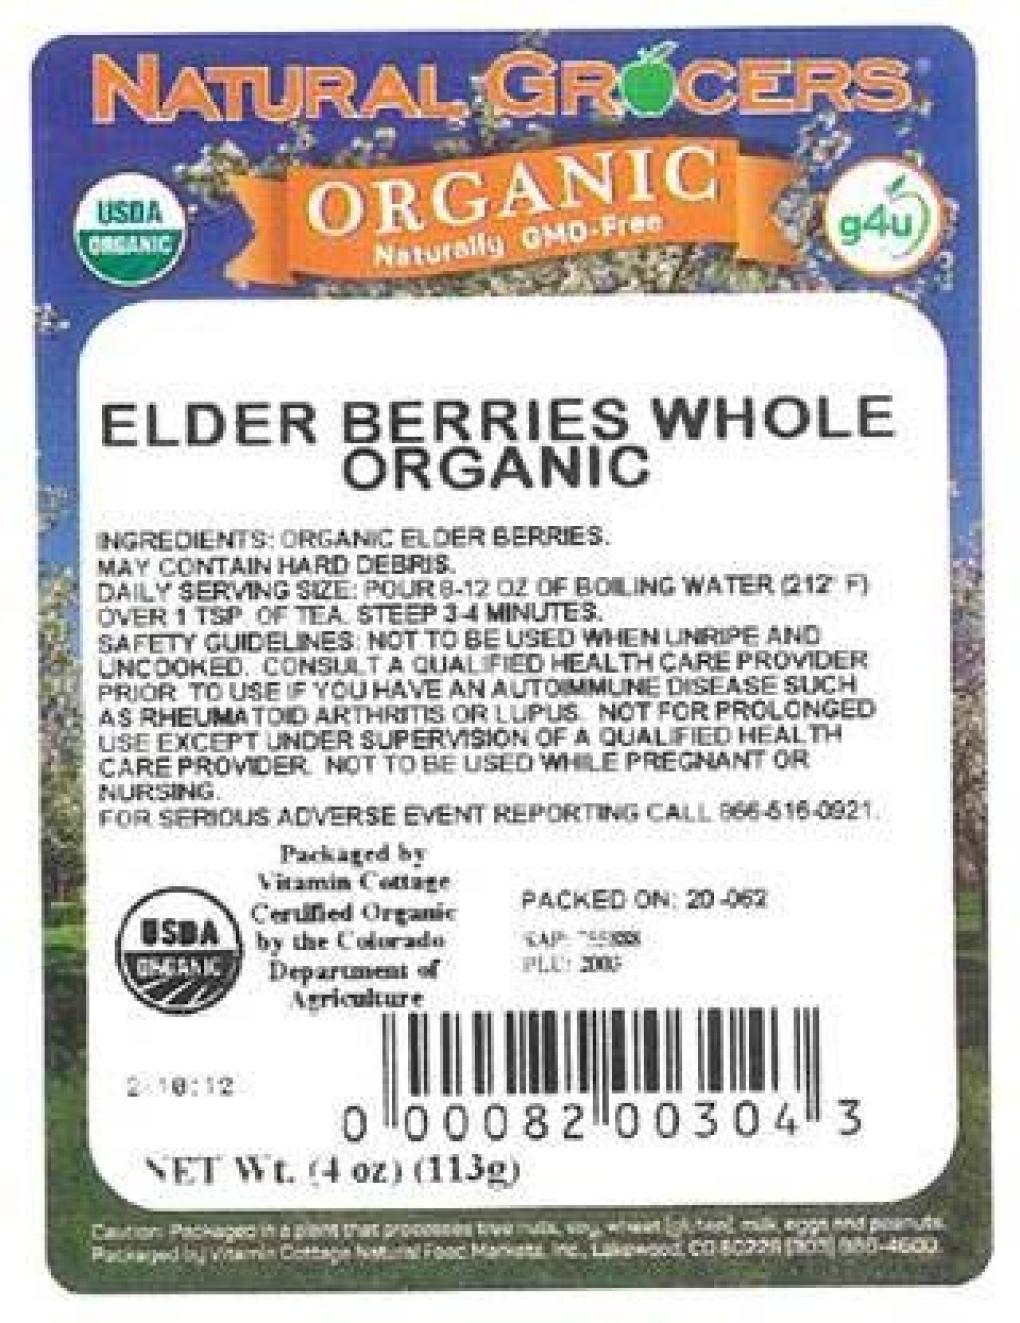 Natural Grocers recalled Organic Elderberries due to Salmonella